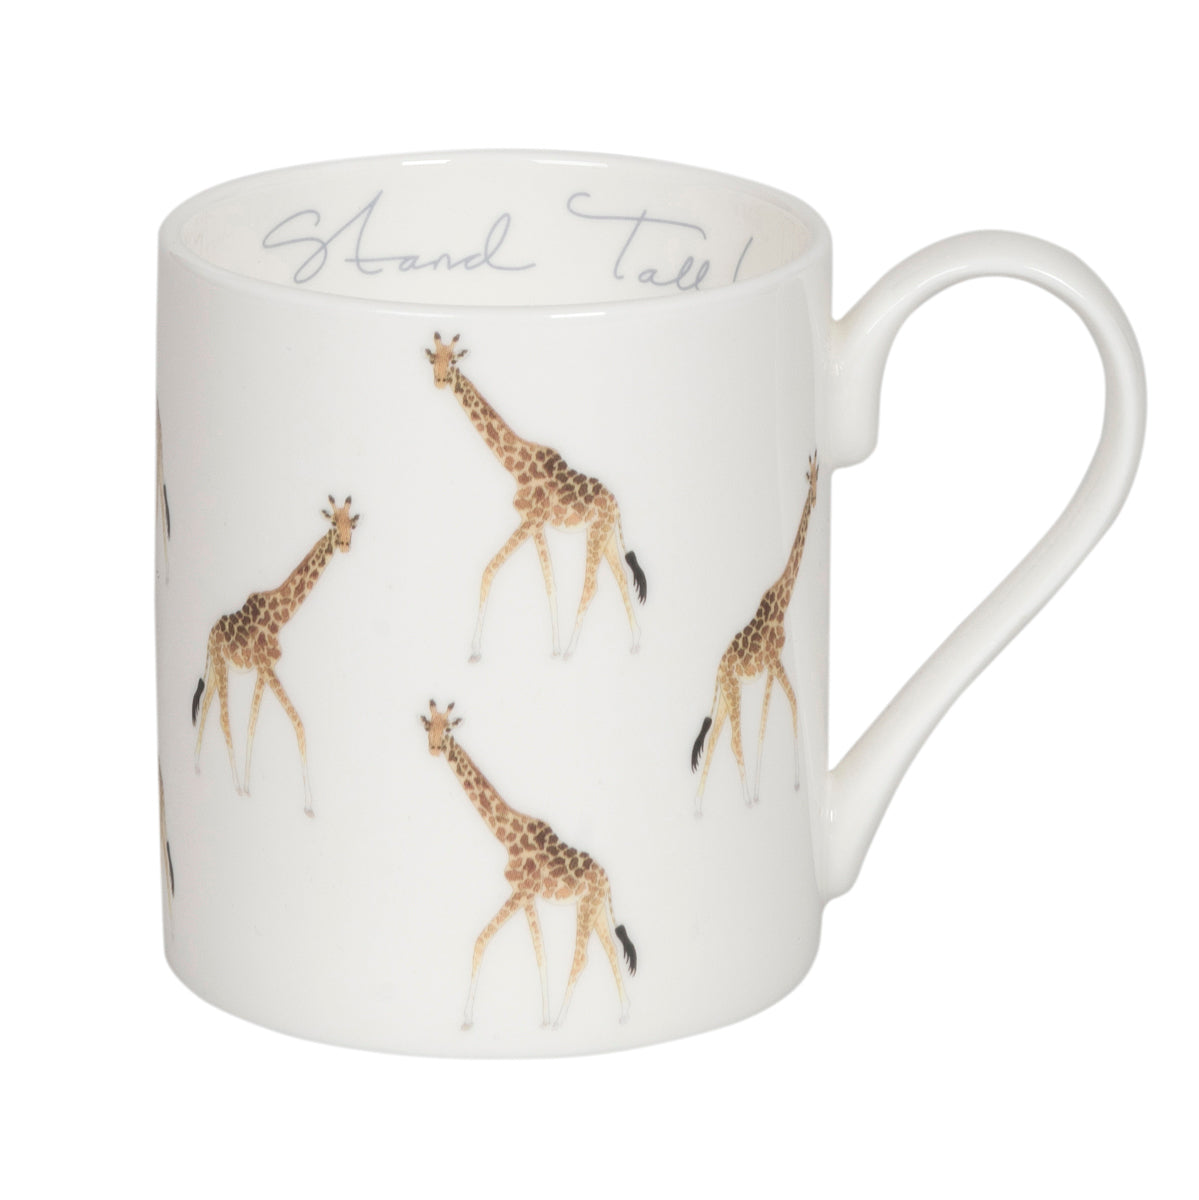 Giraffe Mug by Sophie Allport